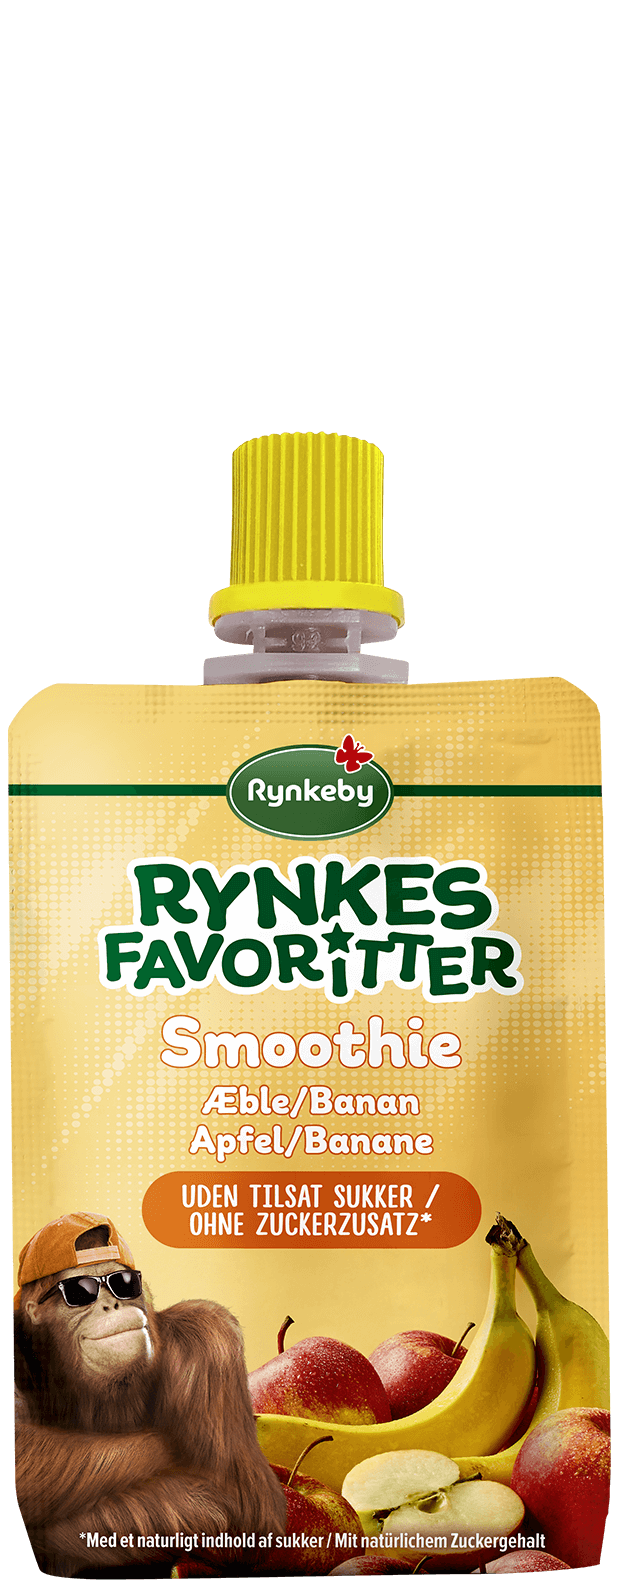 Rynkes Favoritter® Æble/Banan Smoothie